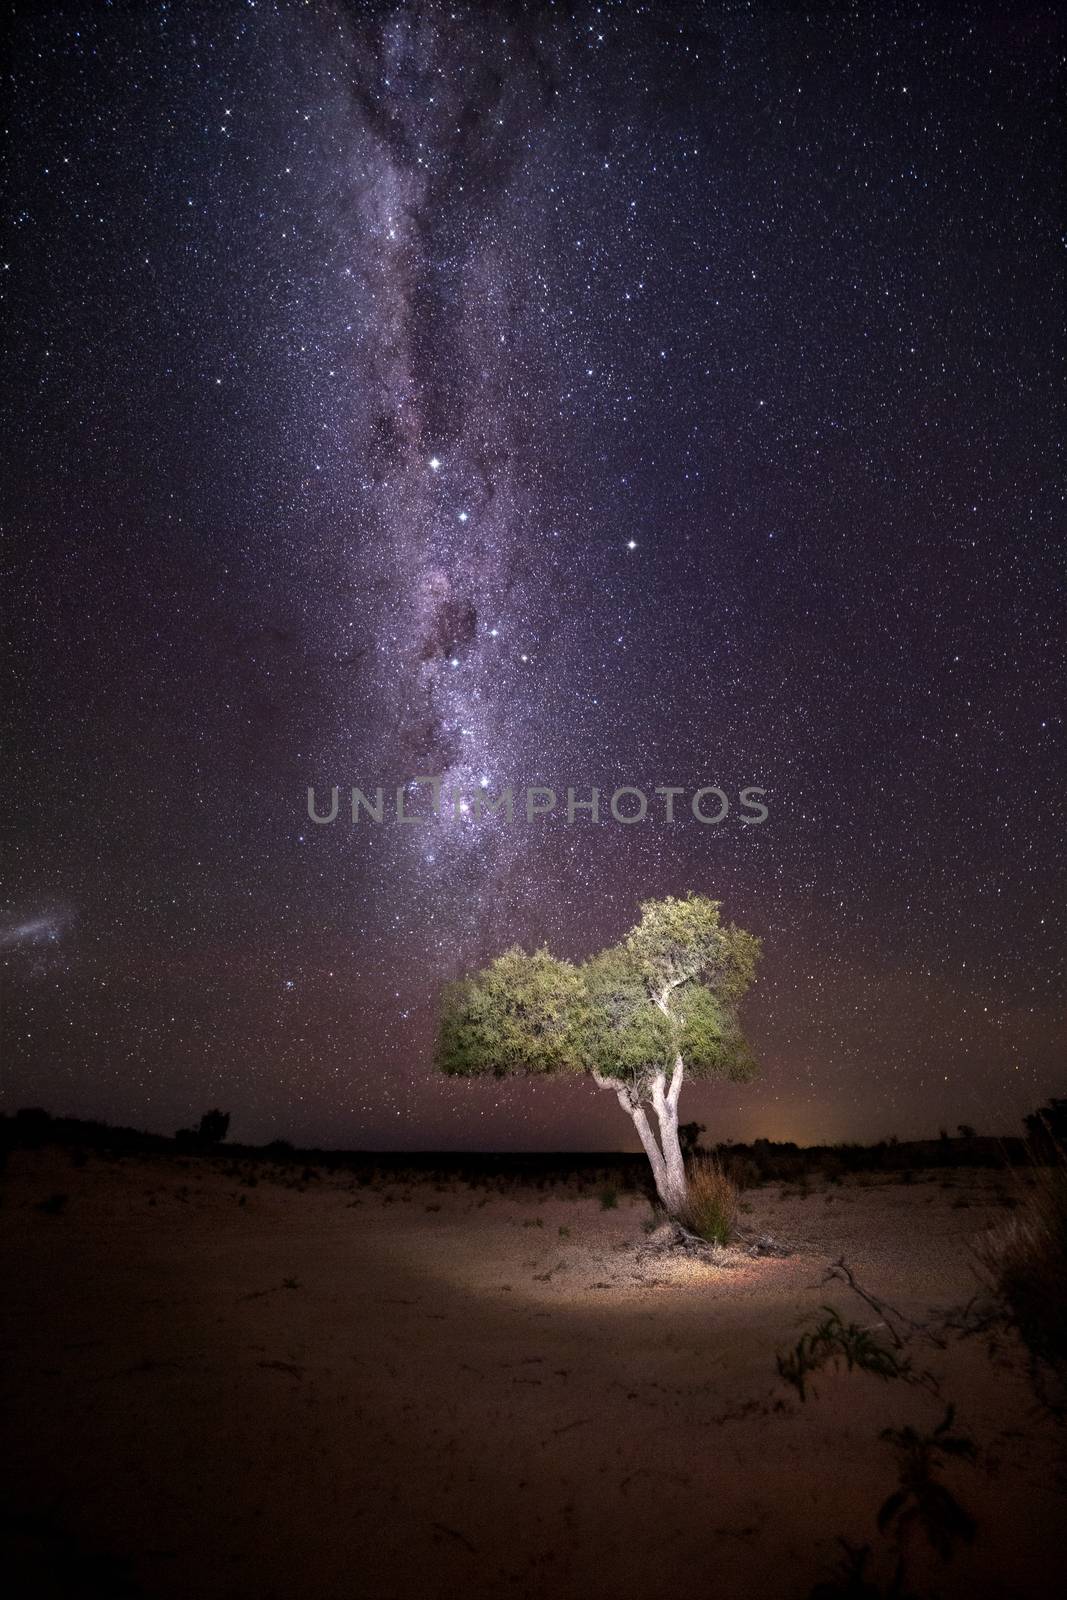 Illuminated tree in desert under a starry night sky with milky way 